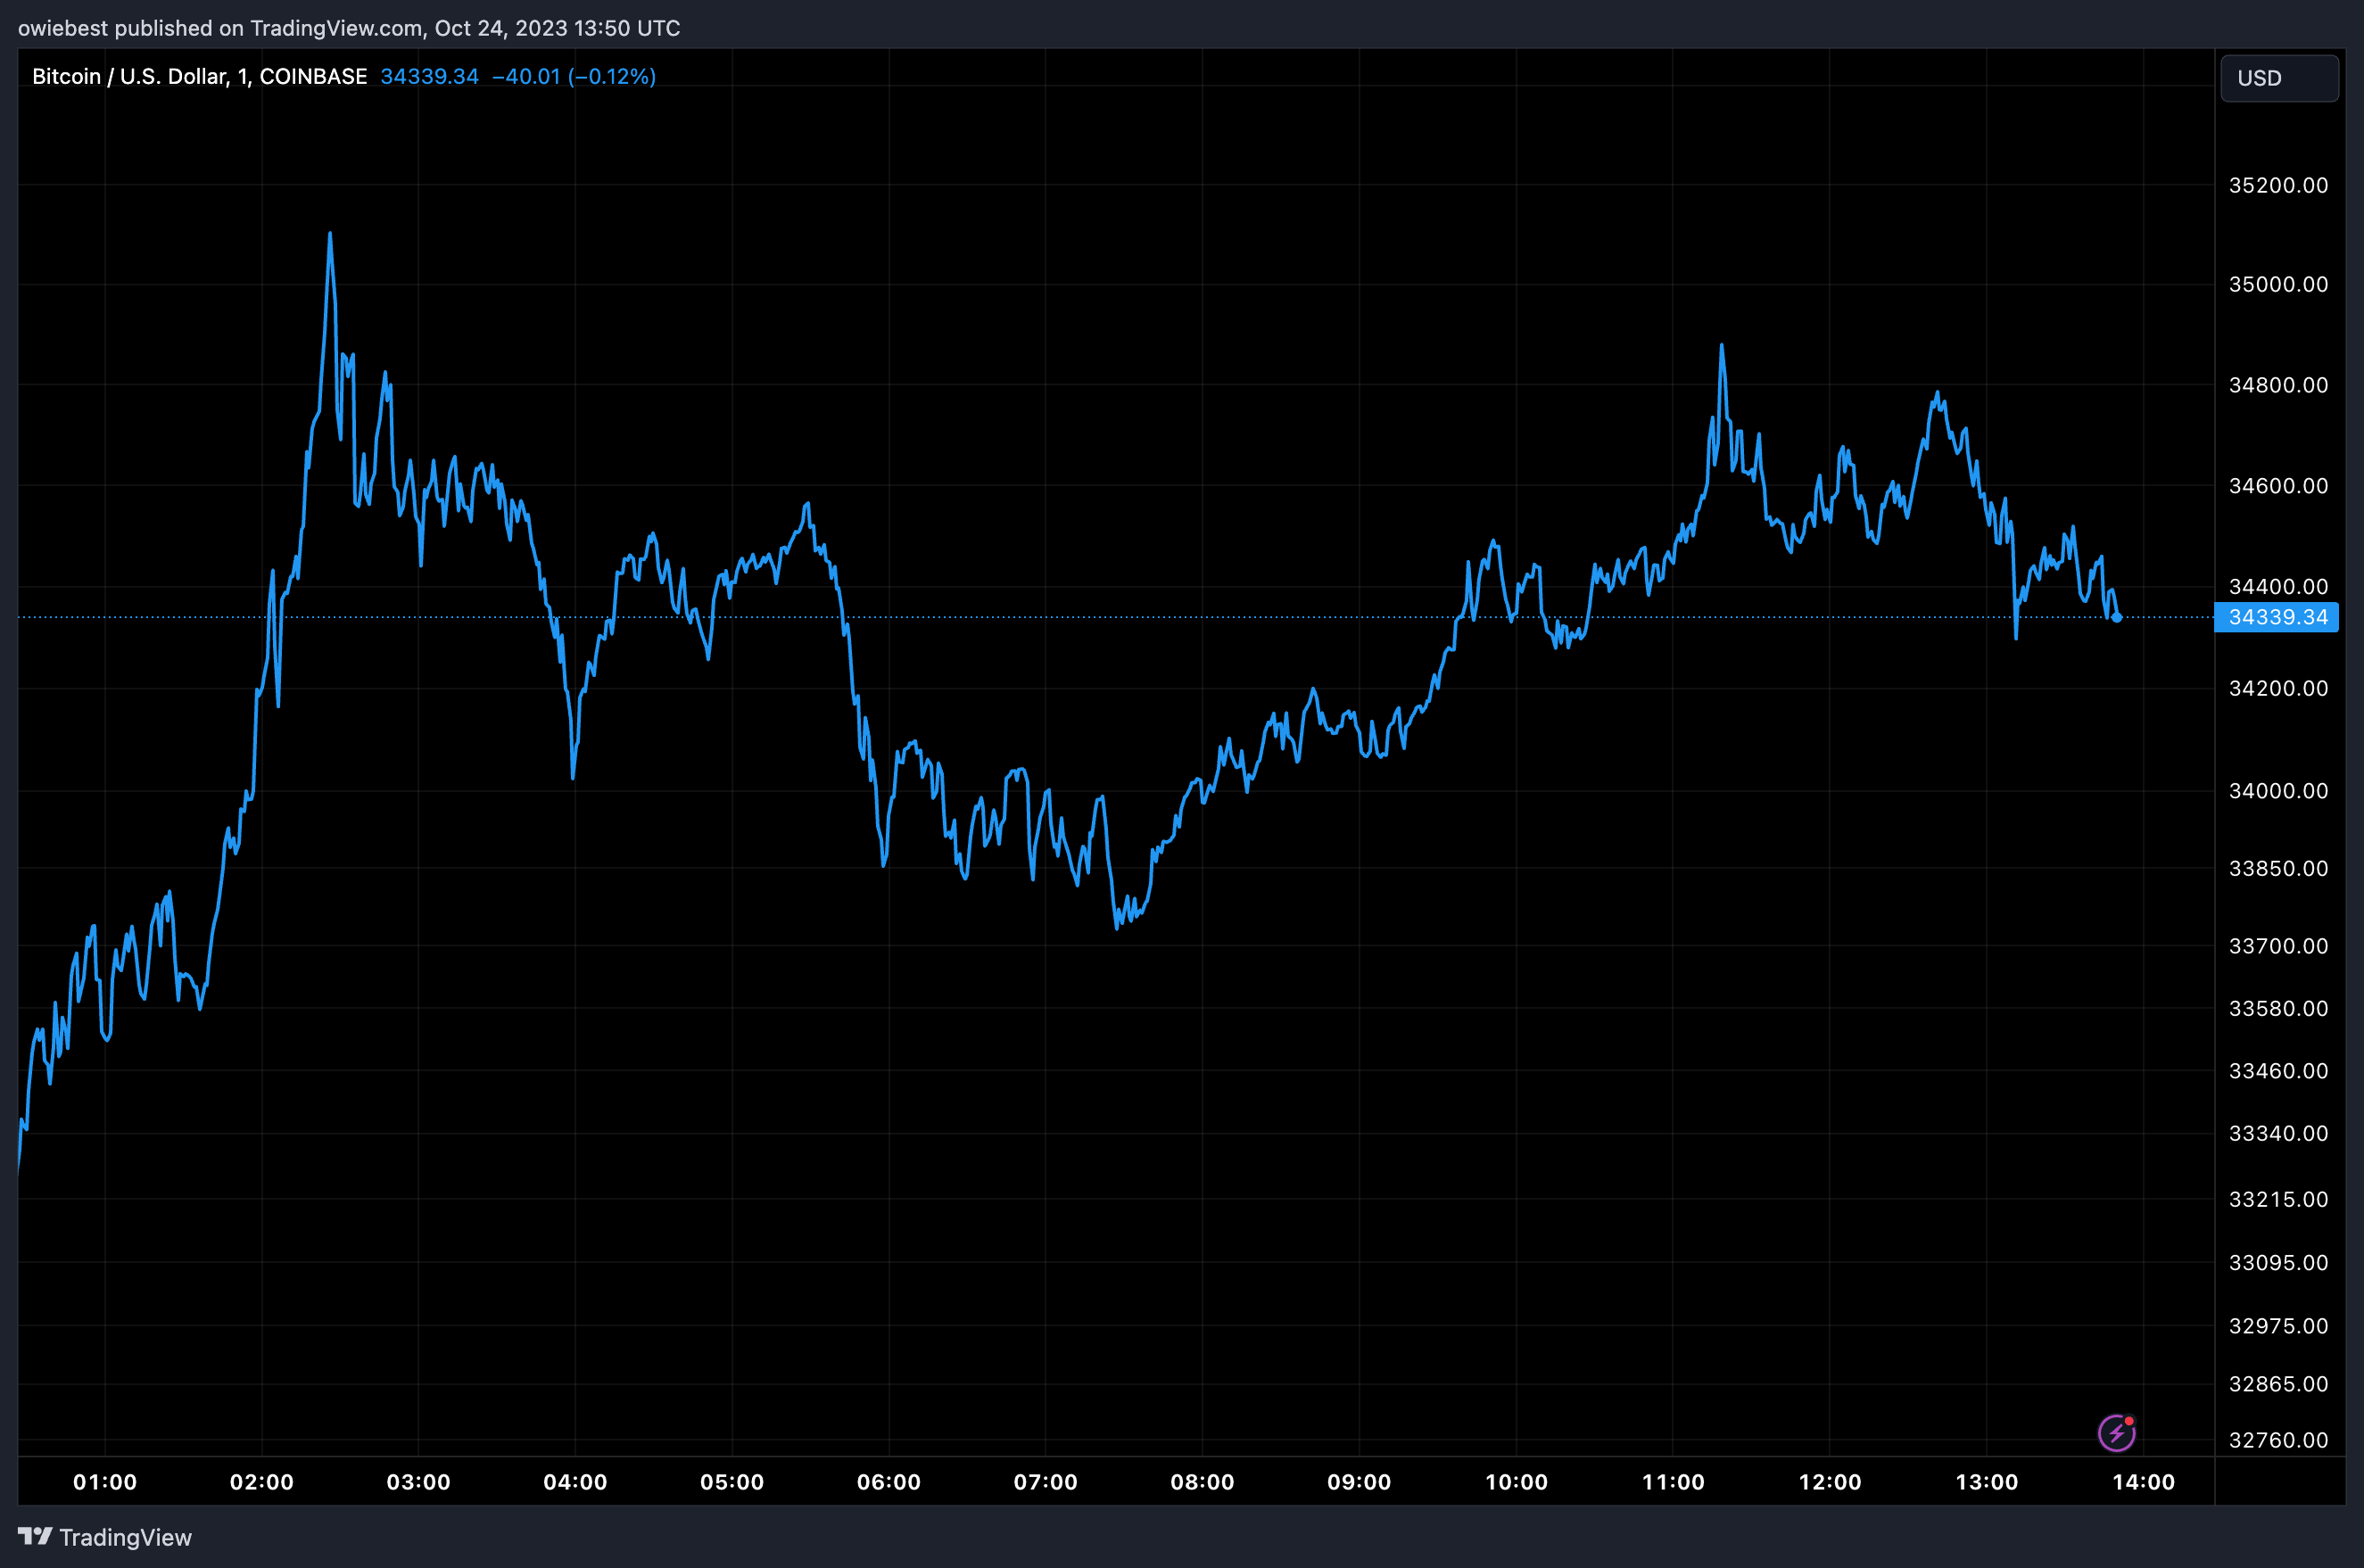 График цен на биткоин от Tradingview.com (спотовый Bitcoin ETF Gold ETF)